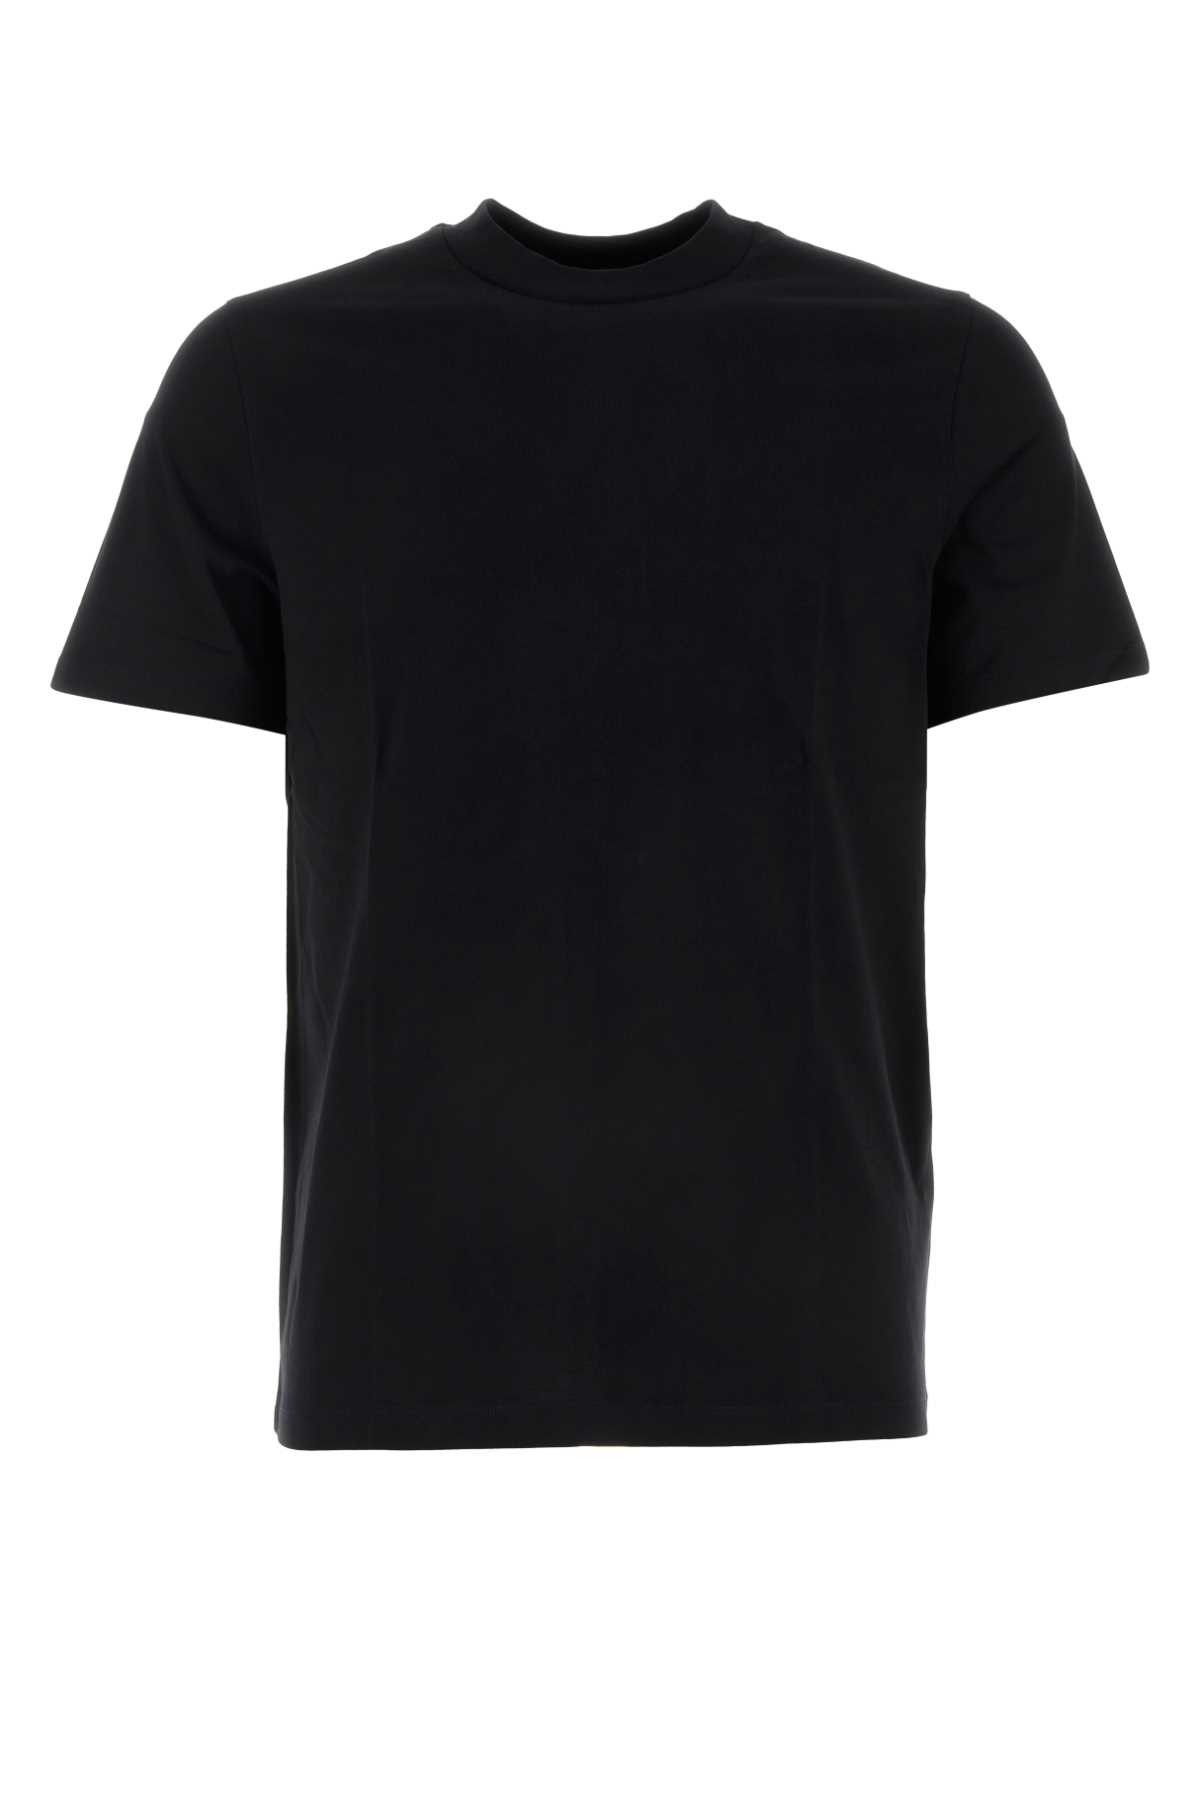 Jil Sander Black Cotton T-shirt In Burgundy